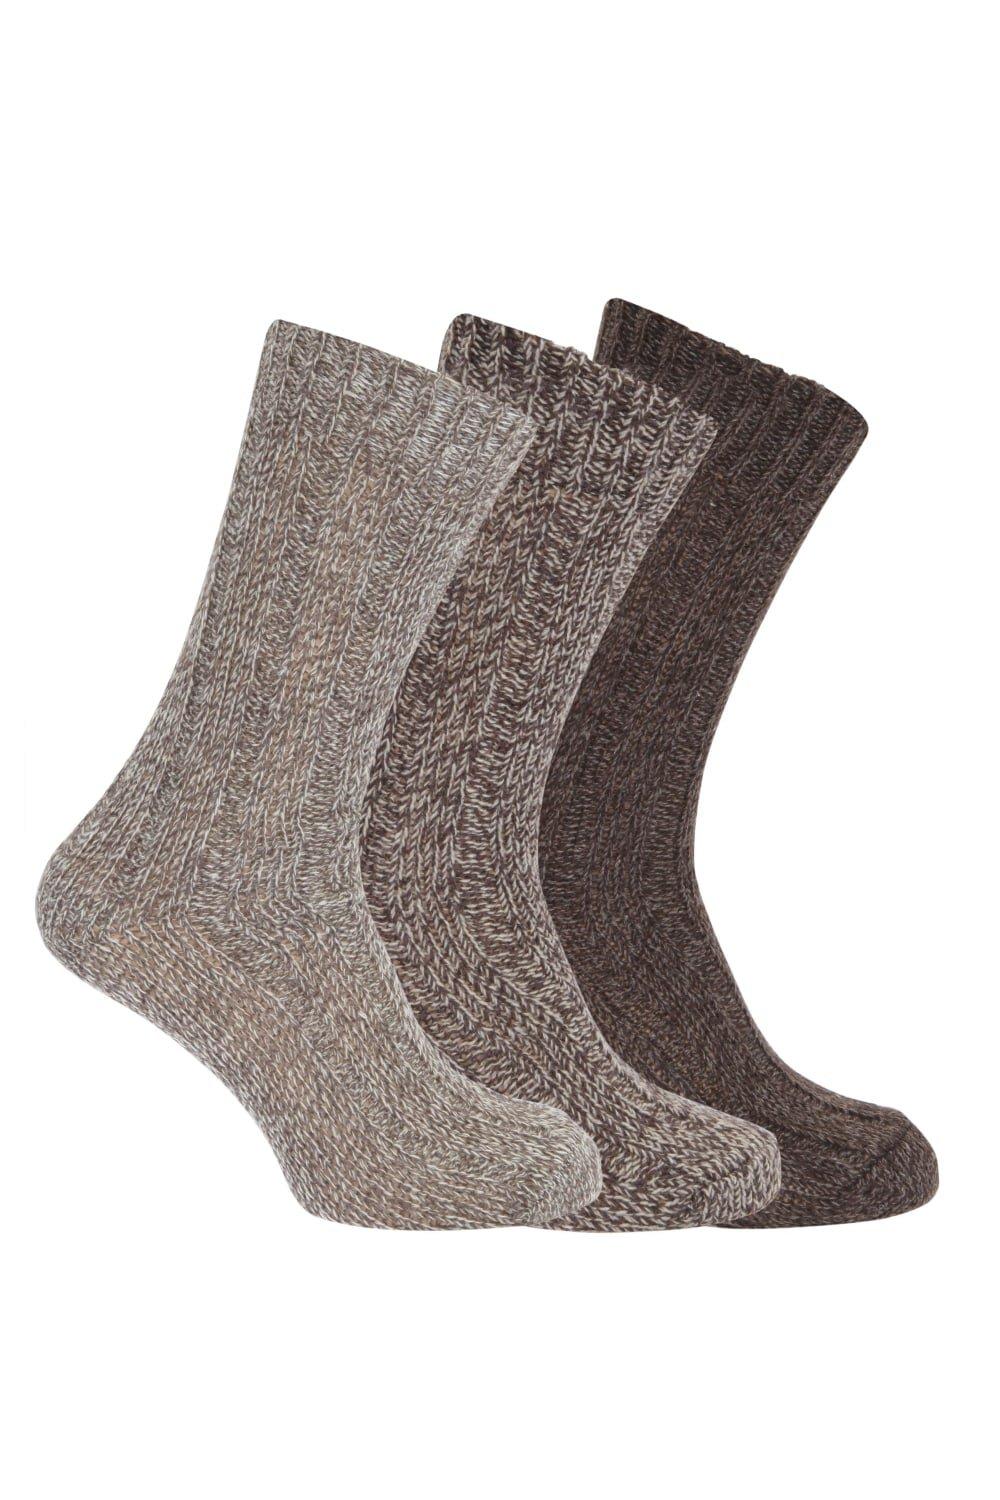 Wool Blend Boot Socks (Pack Of 3)